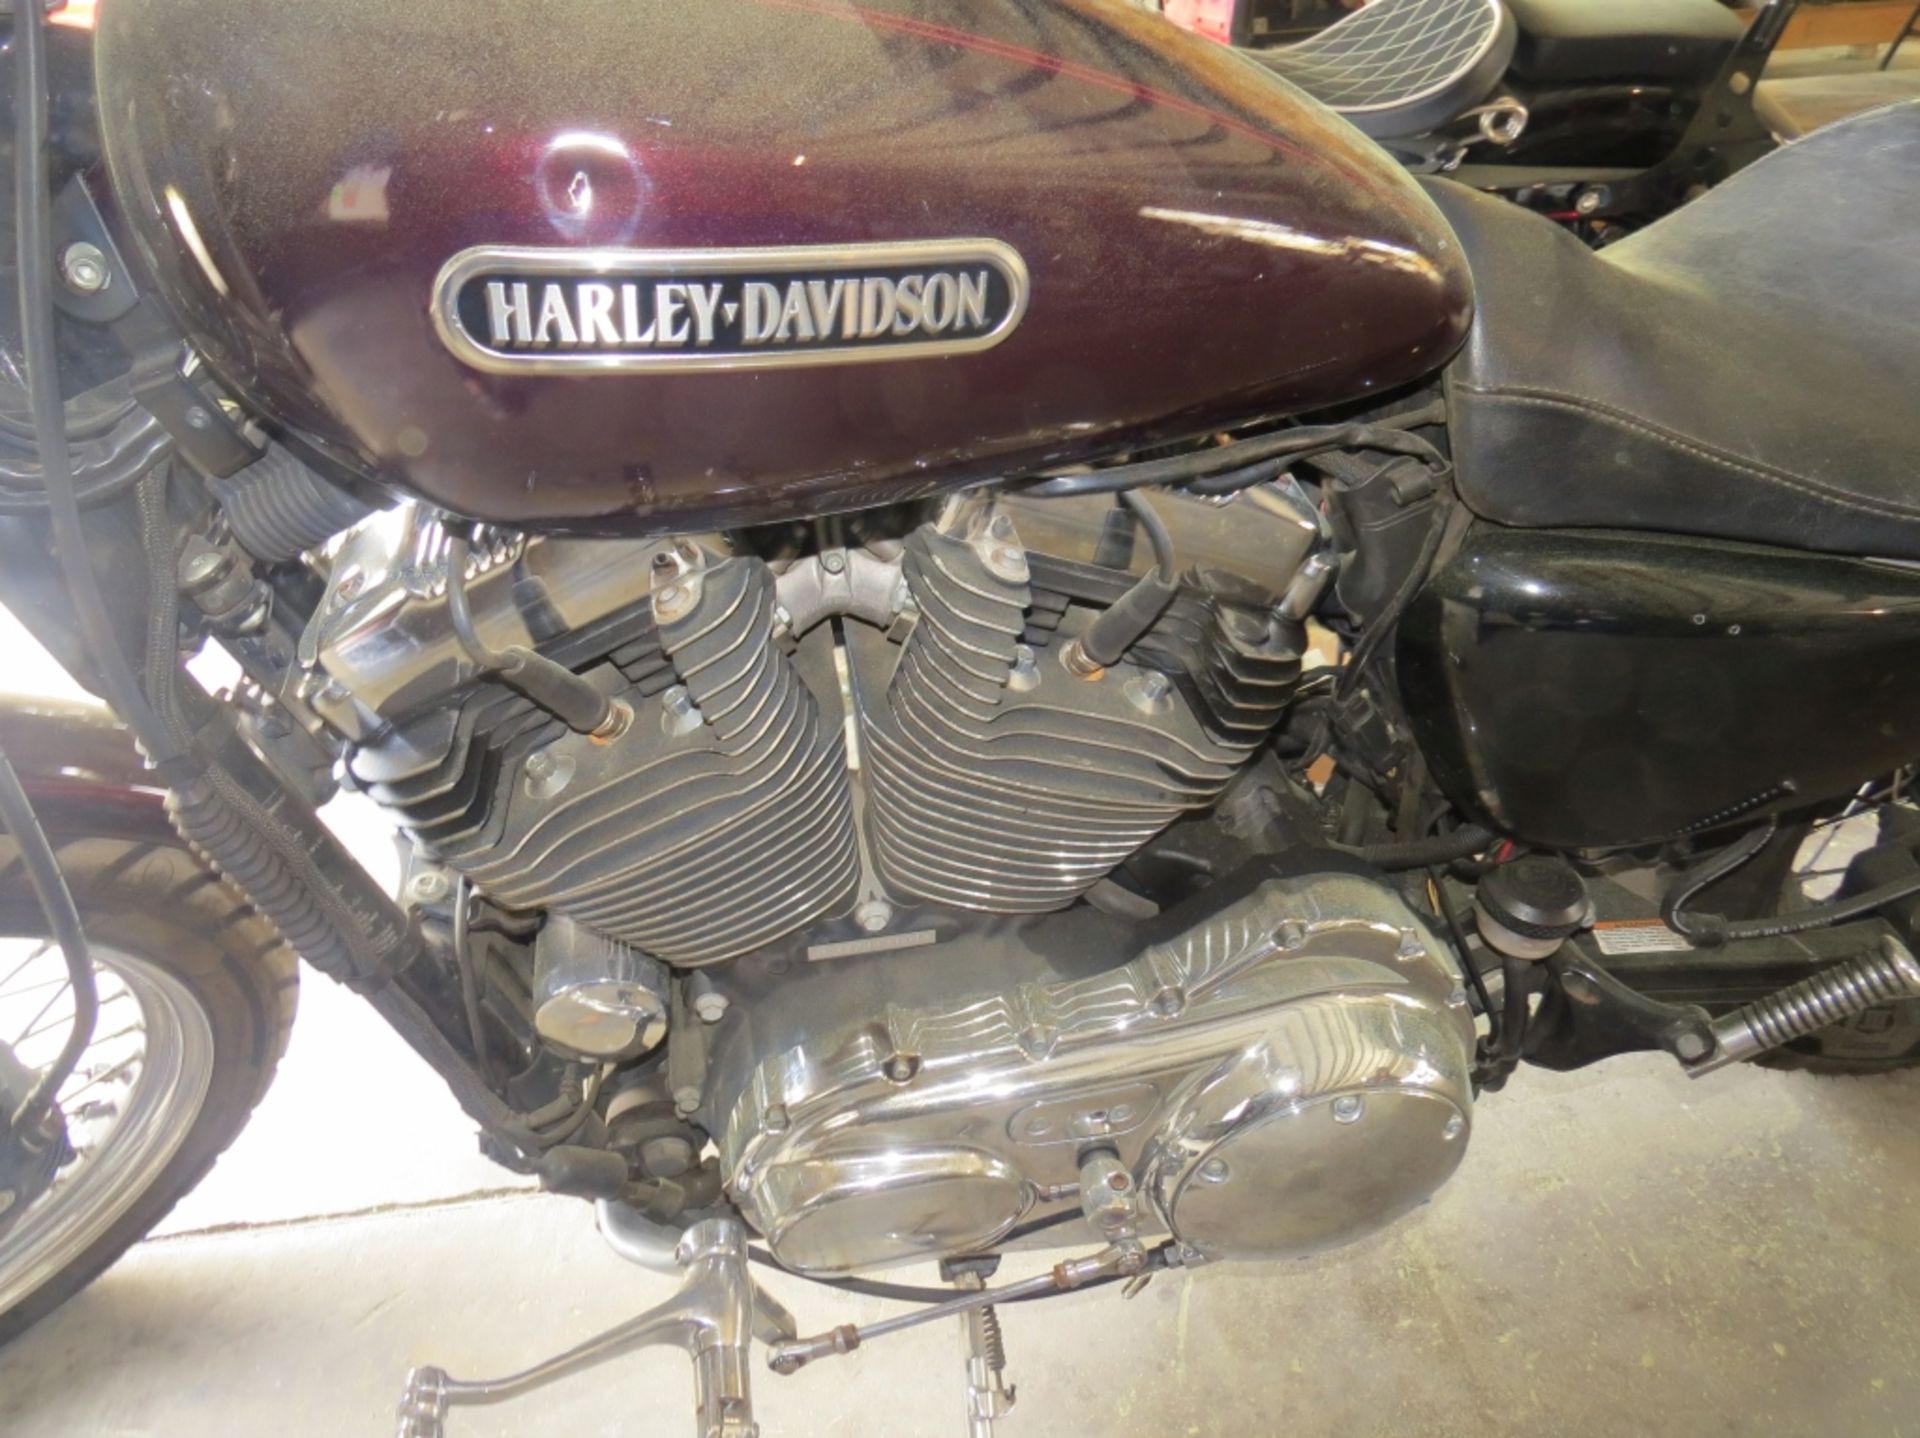 2007 Harley Davidson Sporster XL1200 VIN: 1HD1CX3137K443104 Glittery Garnet in color 16,000 miles - Image 11 of 12